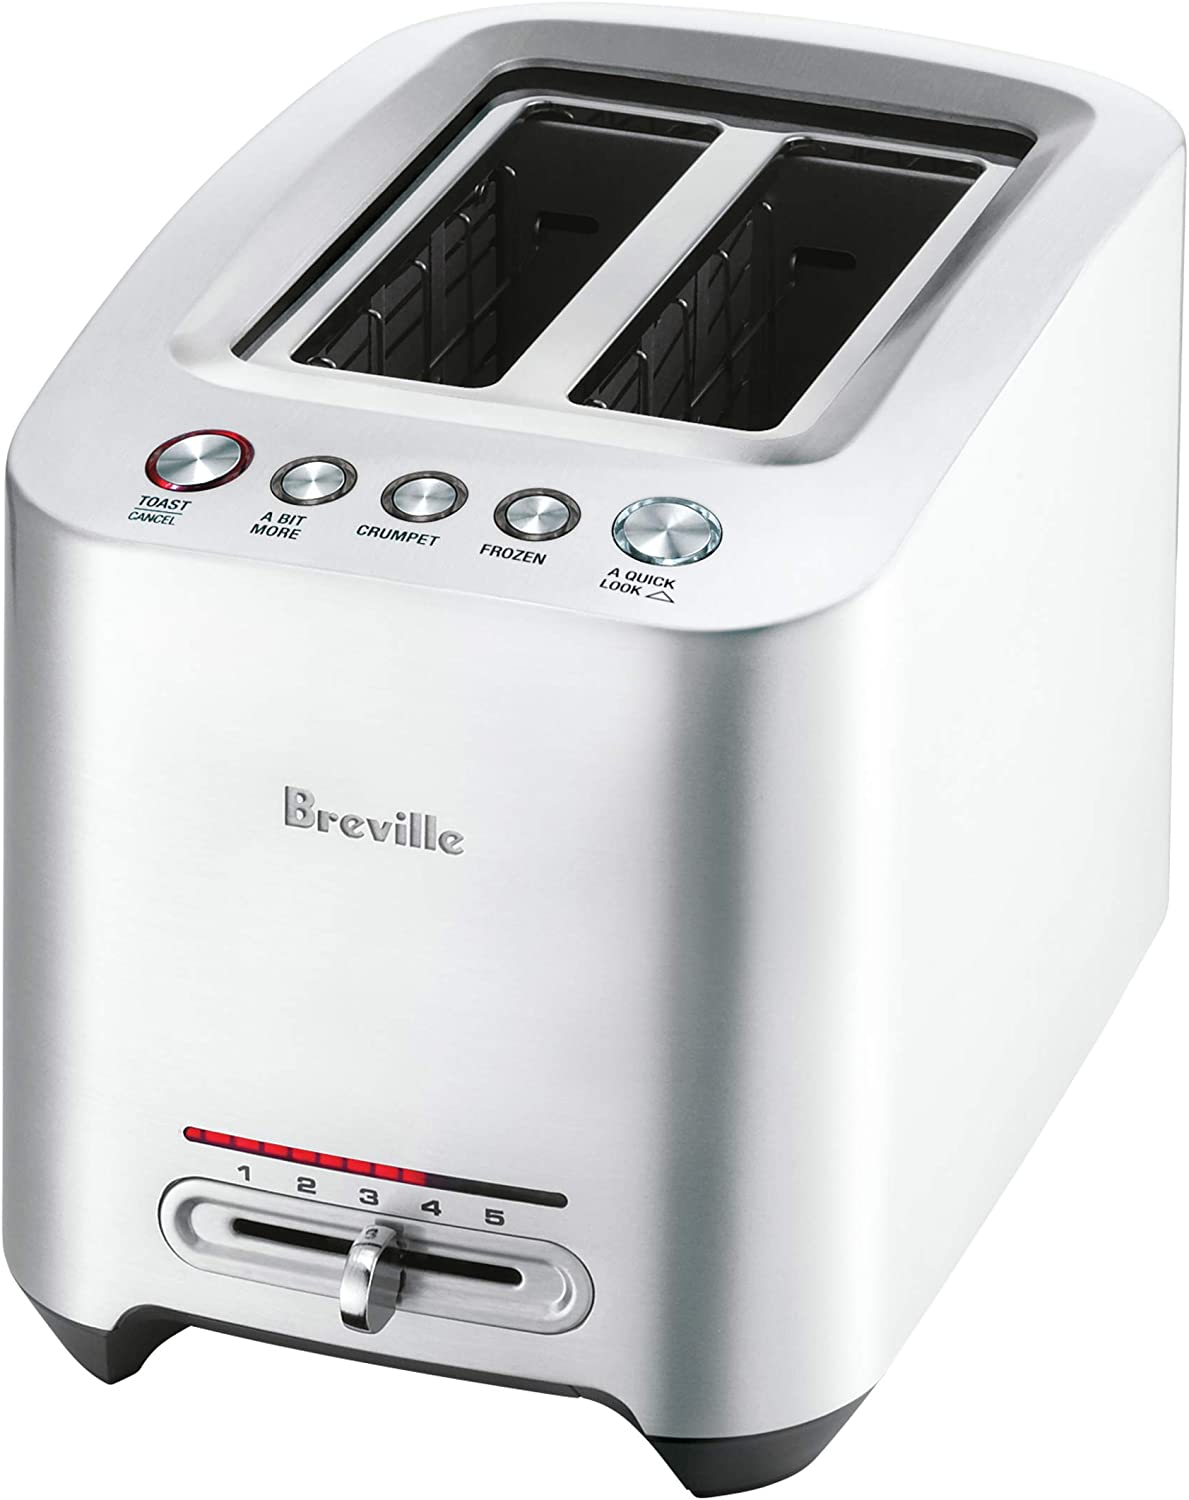 Breville Bit More 4-Slice Toaster, Brushed Stainless Steel, BTA730XL